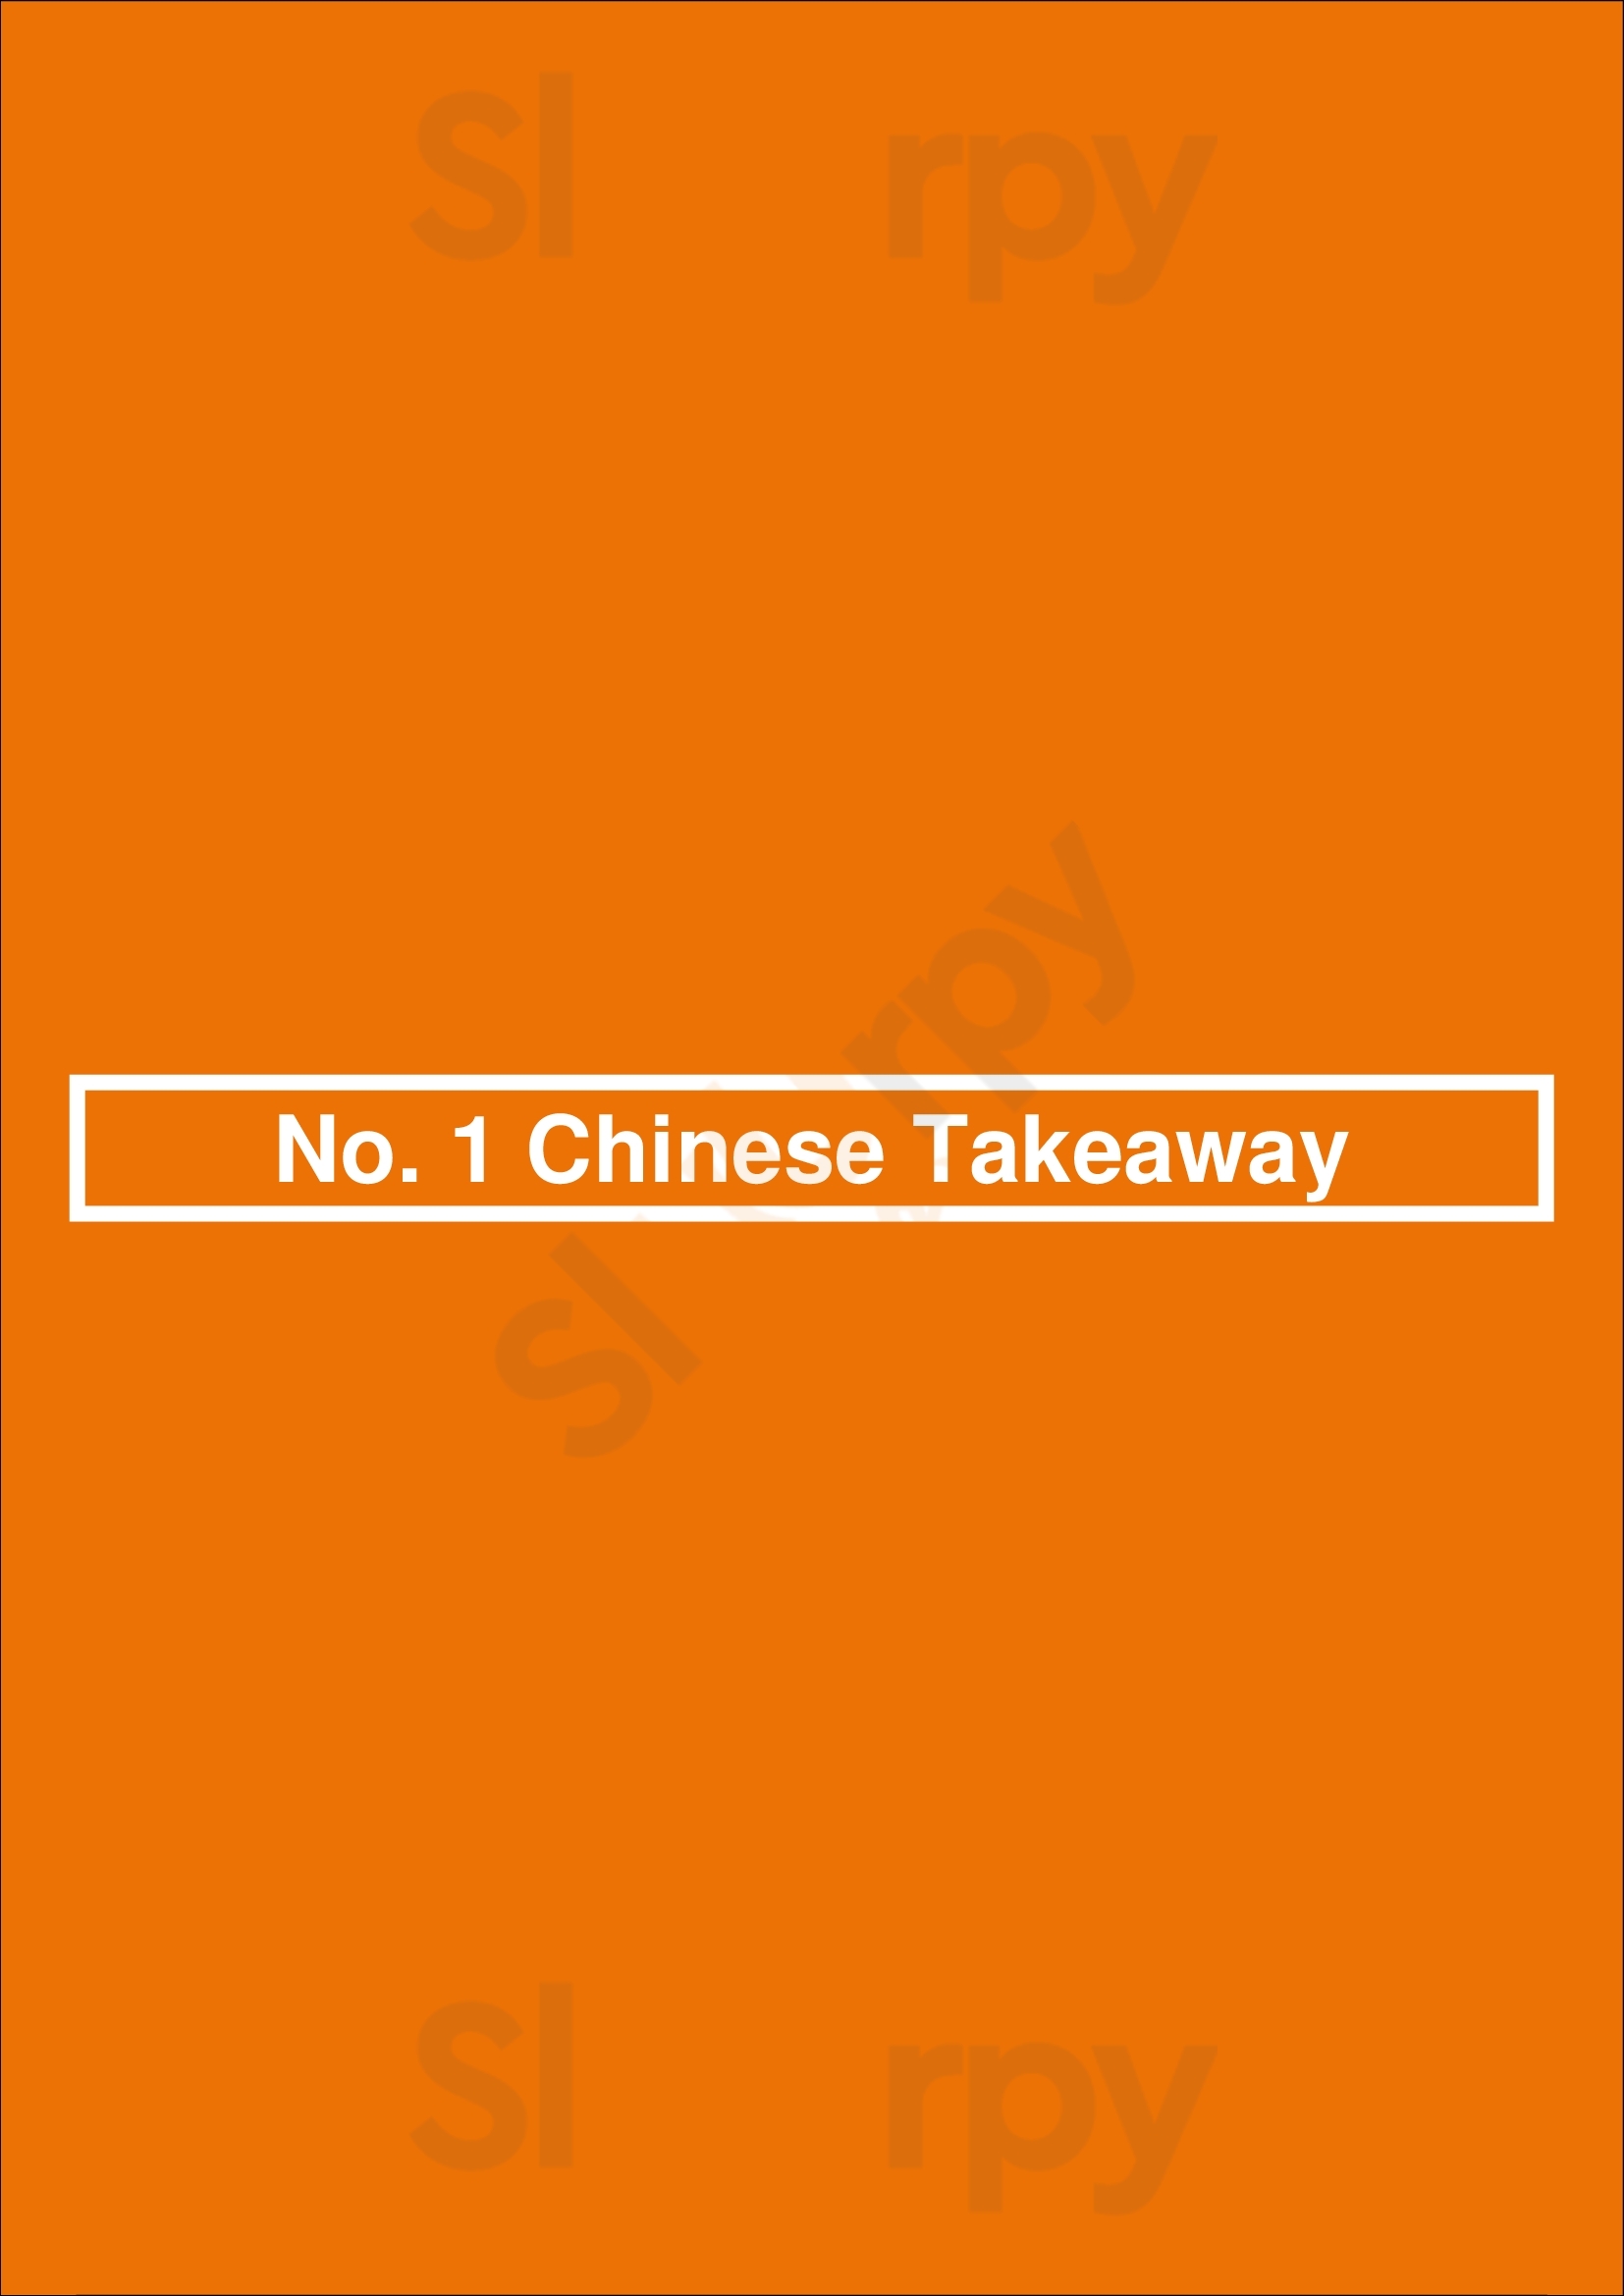 No. 1 Chinese Takeaway Sheffield Menu - 1